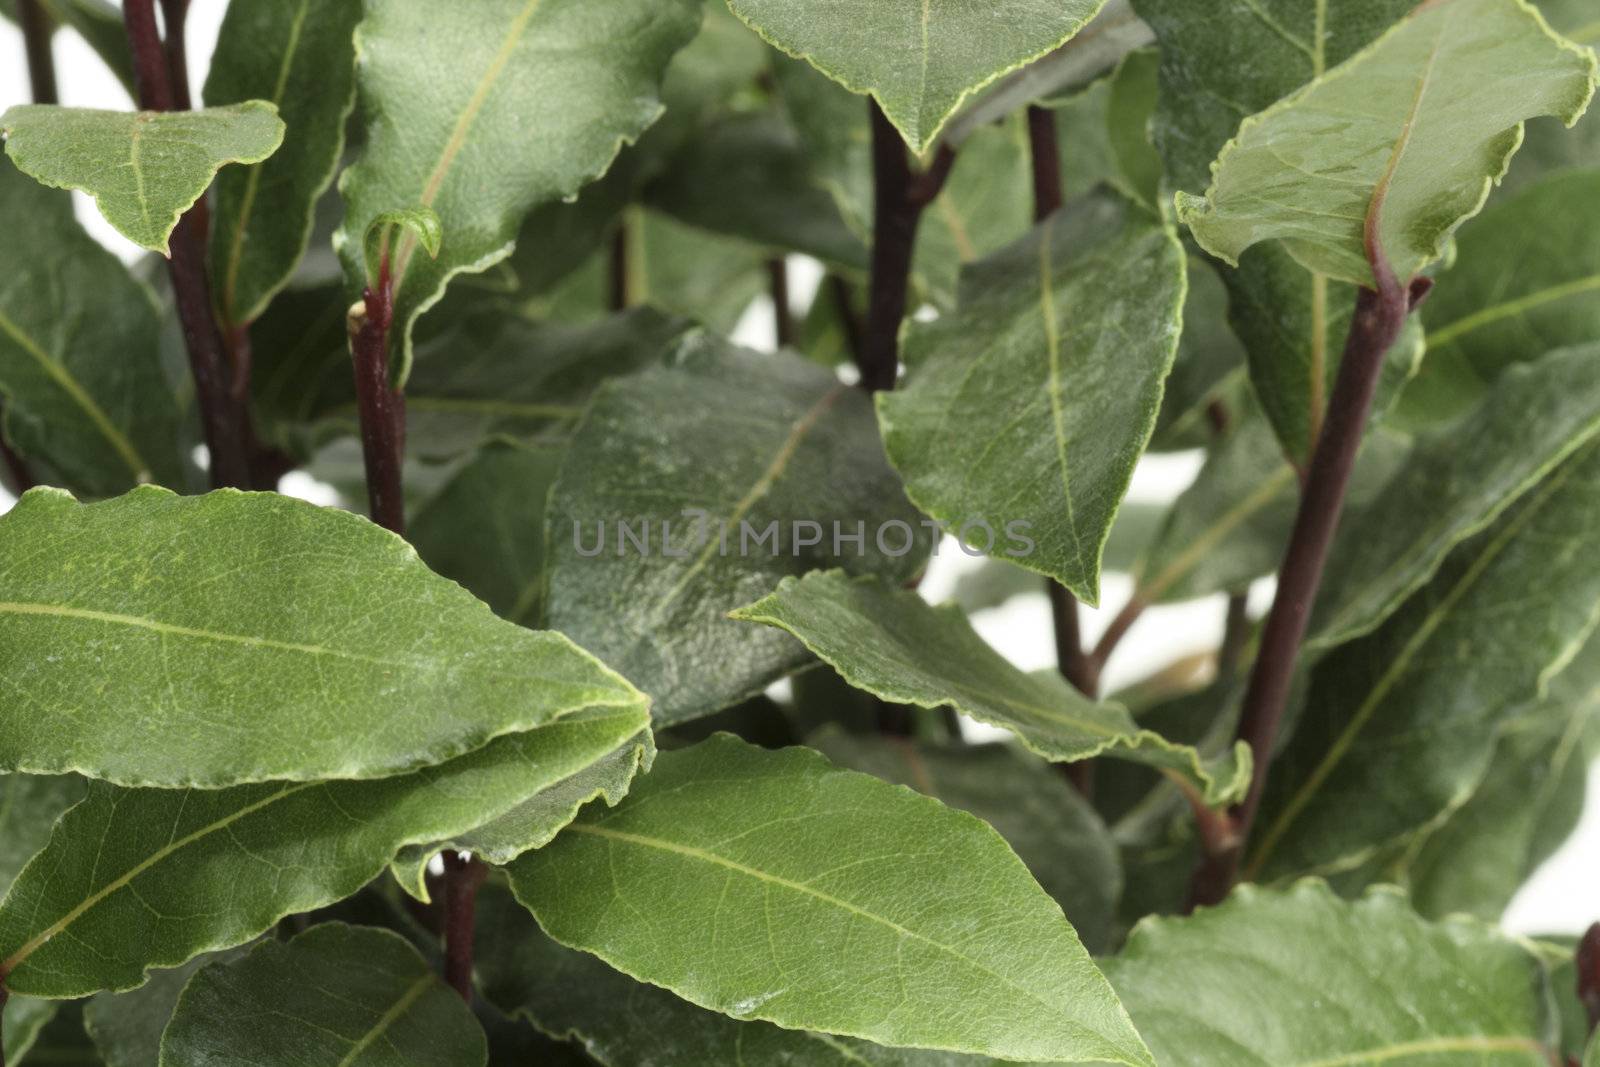 Closeup of green laurel leaves on a laurel bush